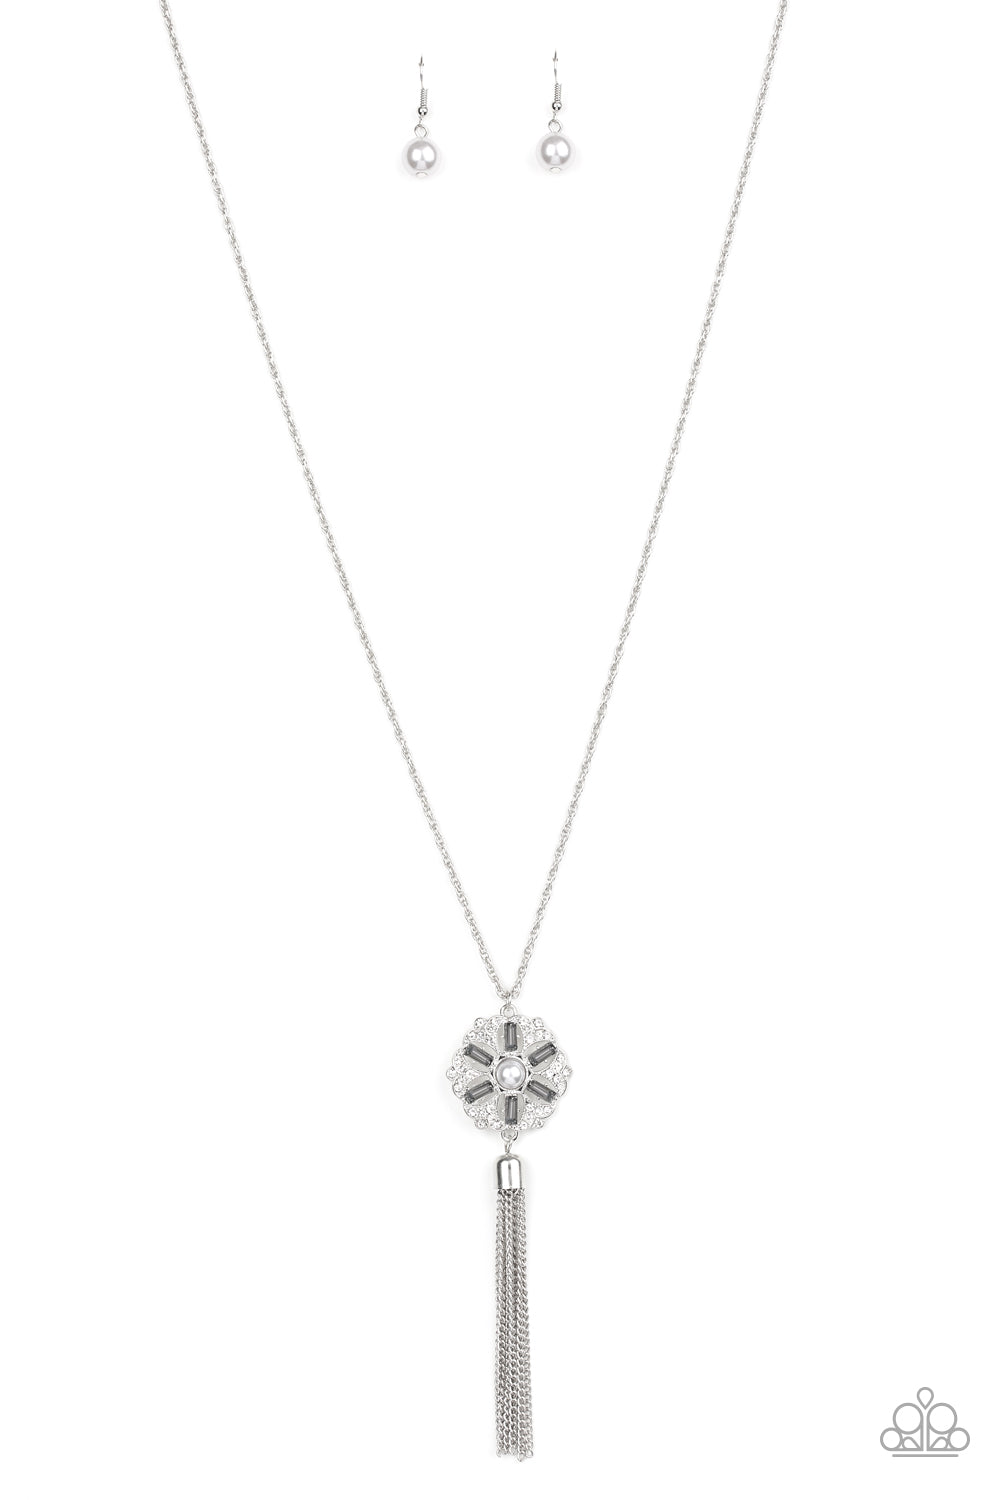 Fine Florals Silver Necklace freeshipping - JewLz4u Gemstone Gallery